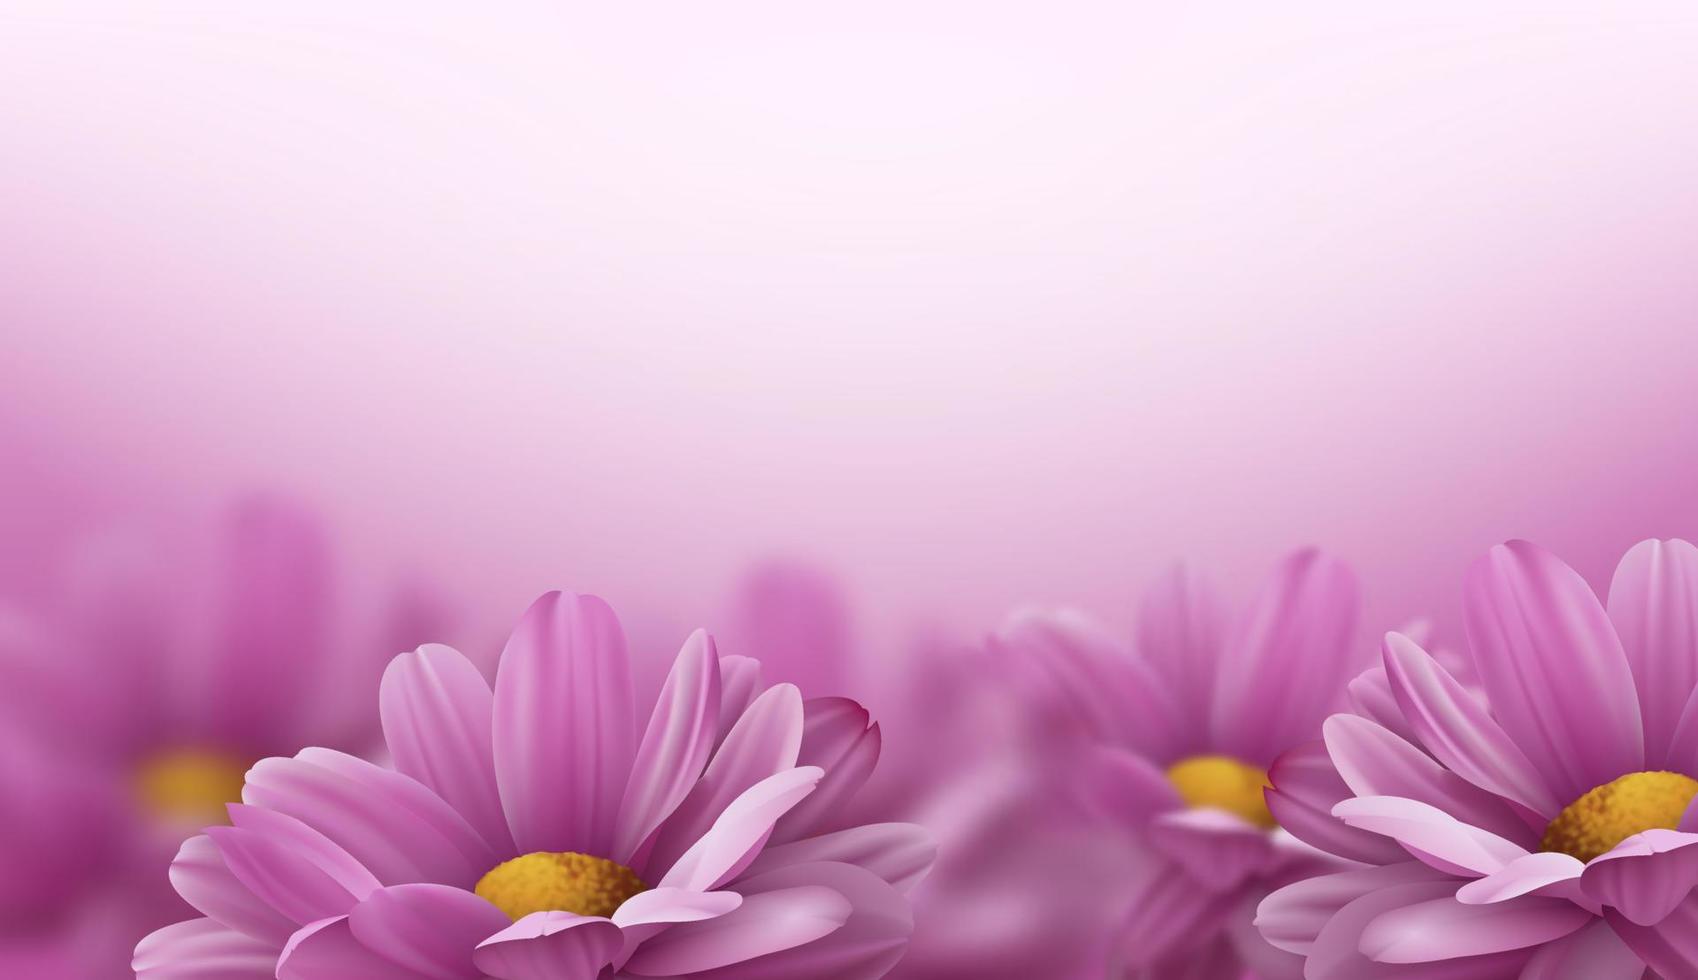 realistiska rosa 3d krysantemum blommor på vit bakgrund. vektor illustration